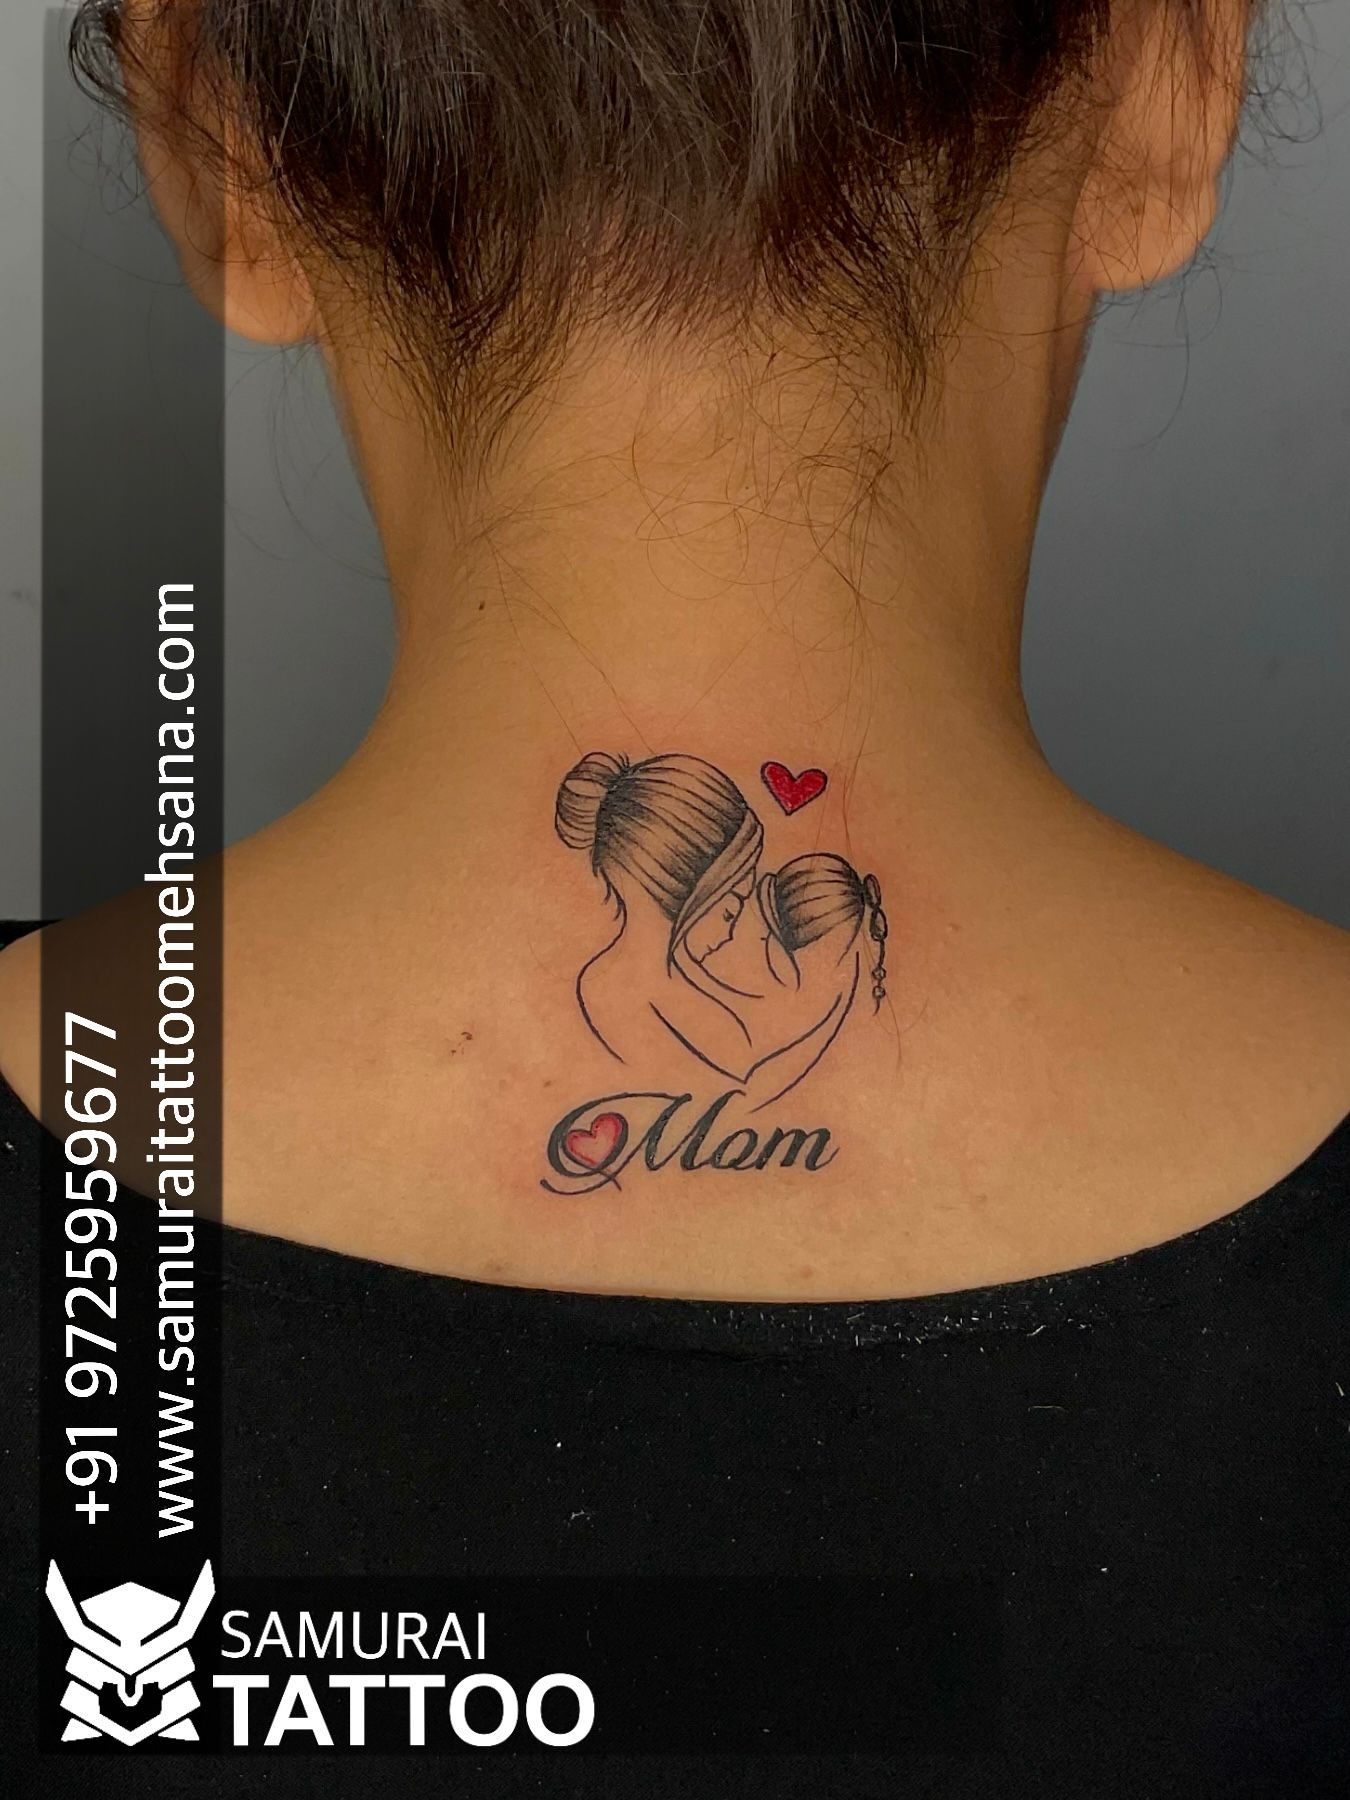 The Art Ink Tattoo Studio - Mom love heartbeat tattoo | Facebook